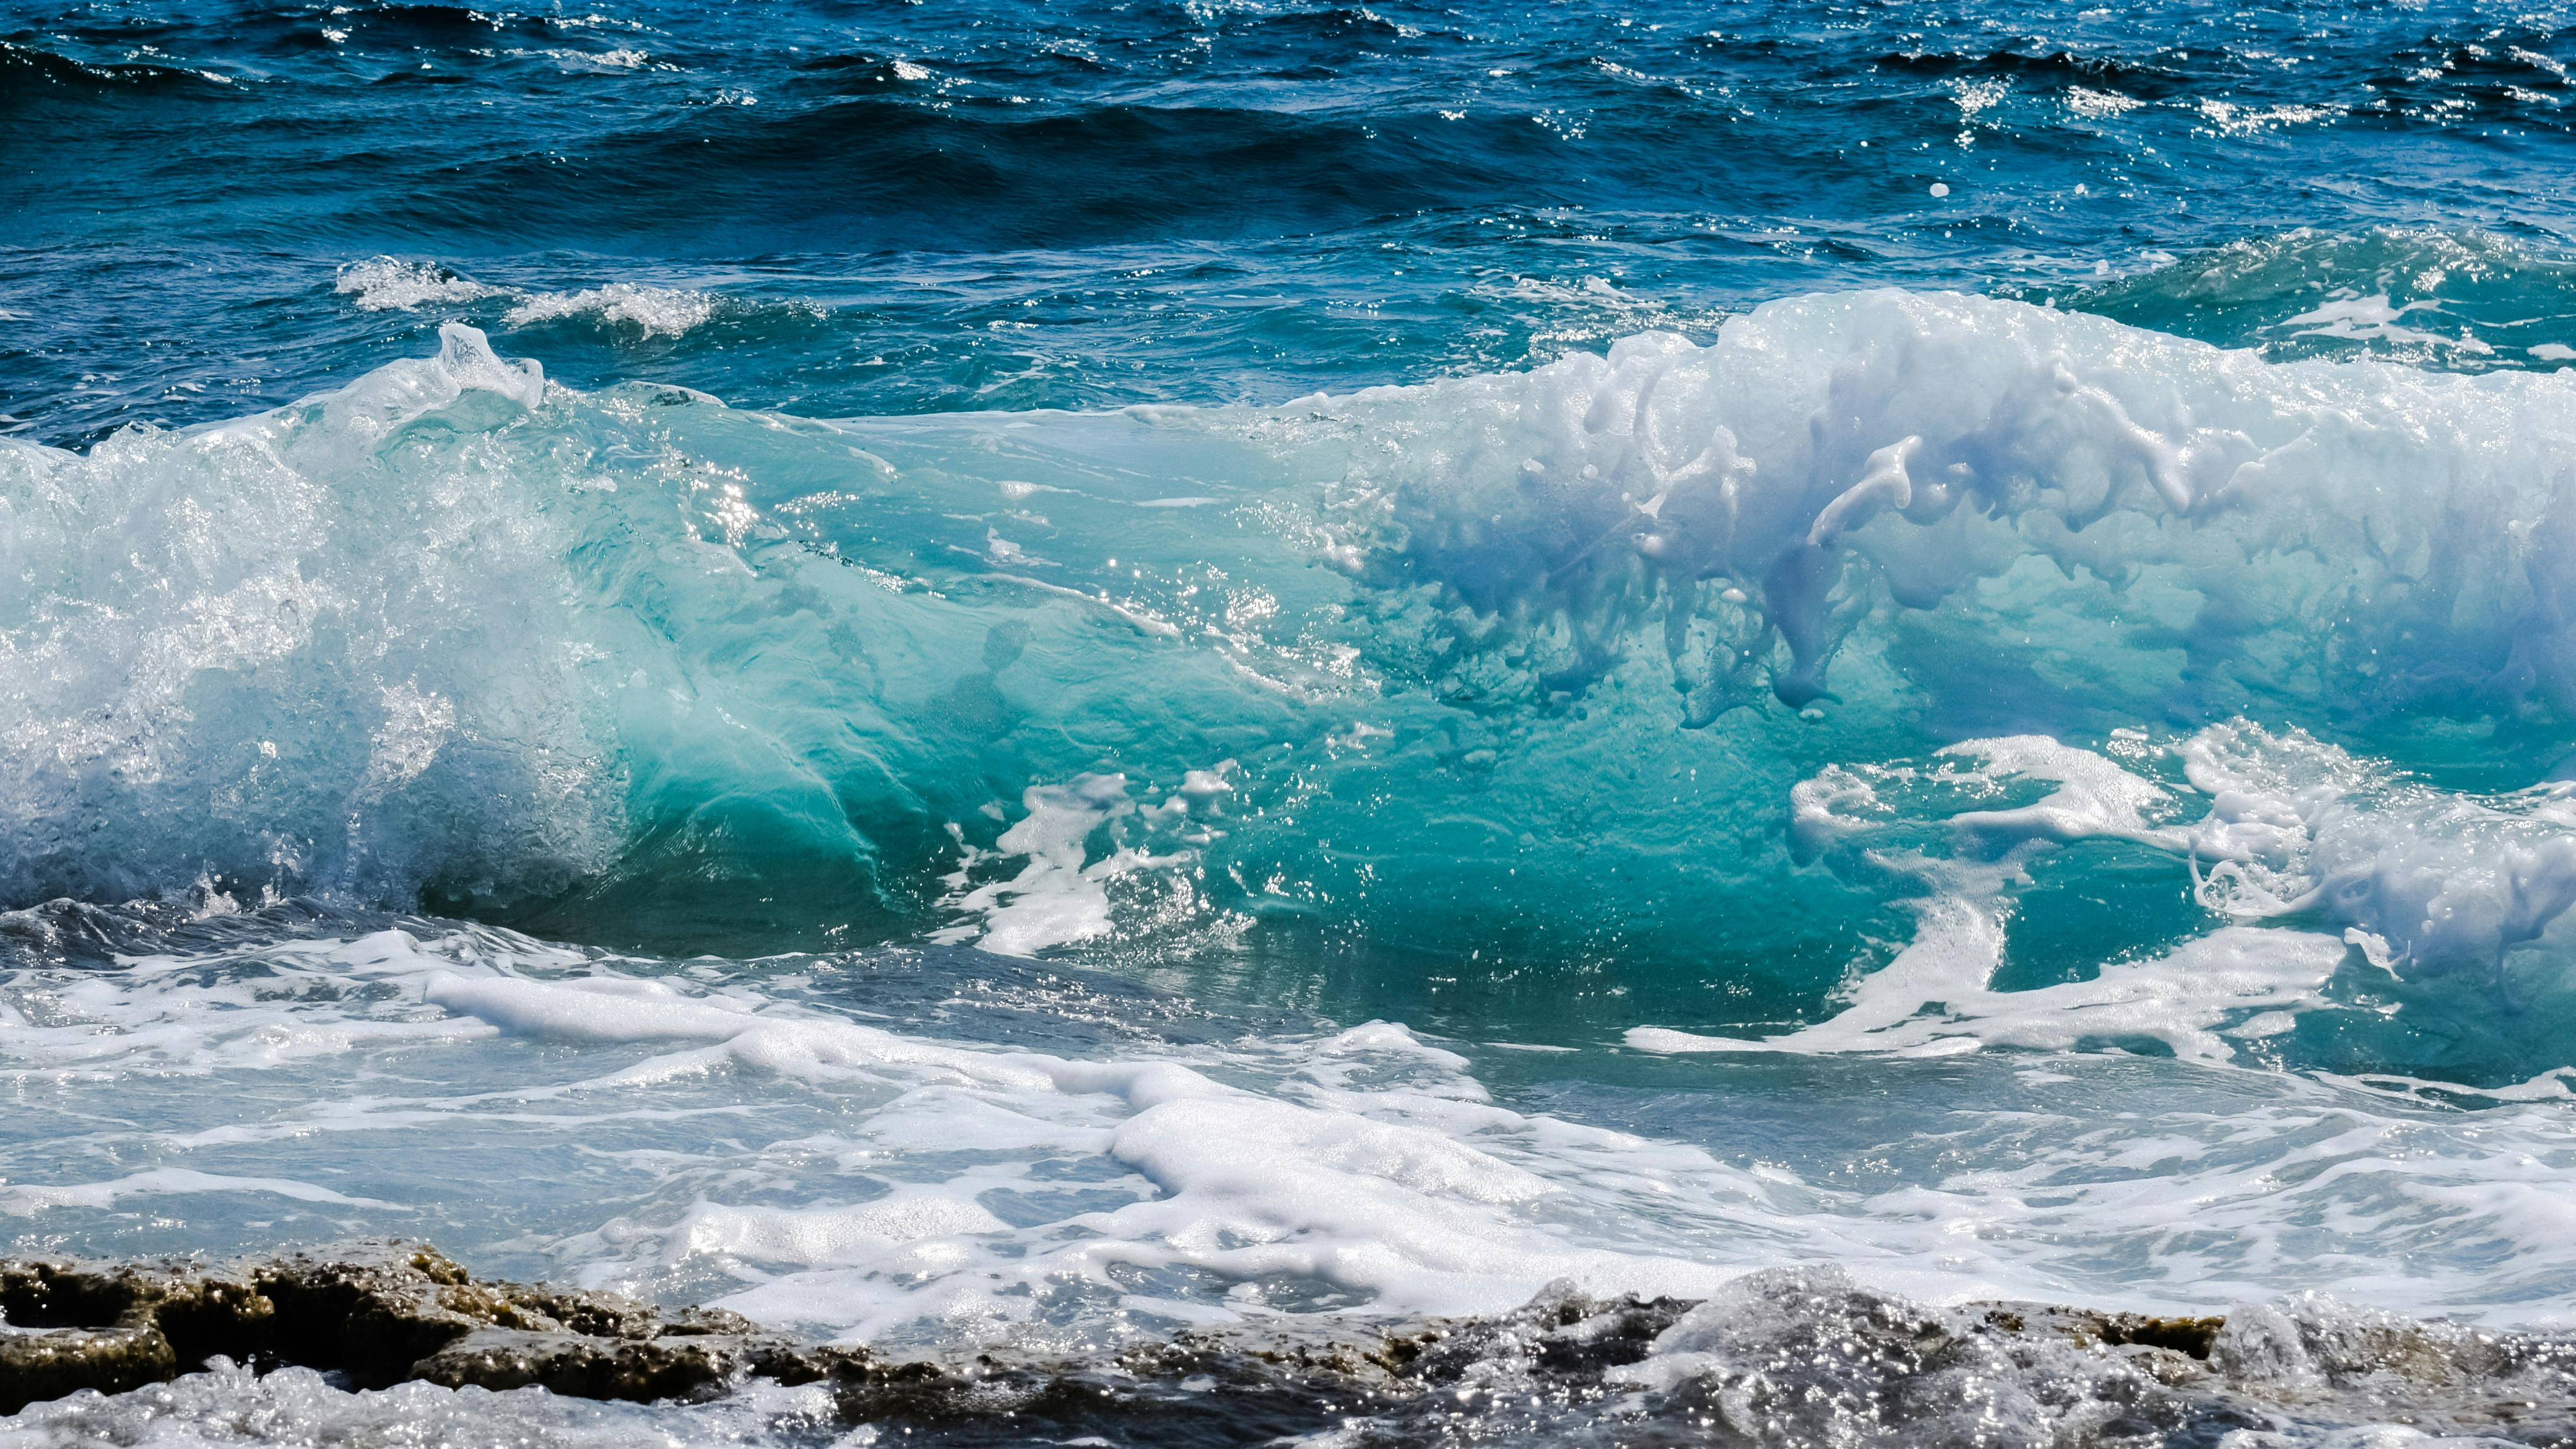 sea-waves-hitting-rocks-free-stock-photo